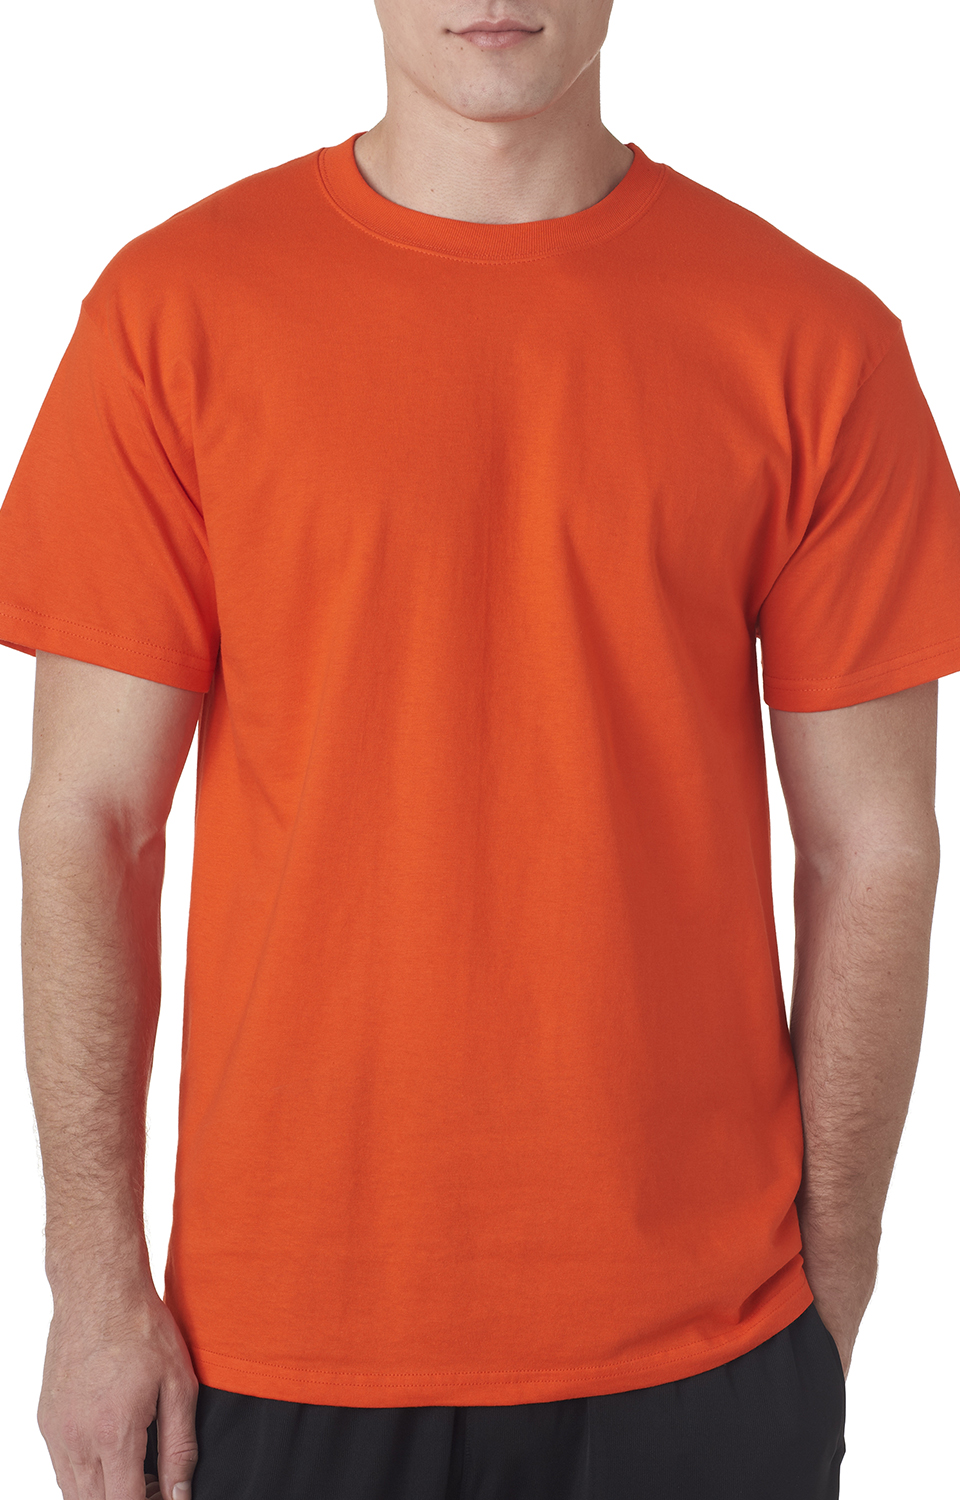 orange champion shirts